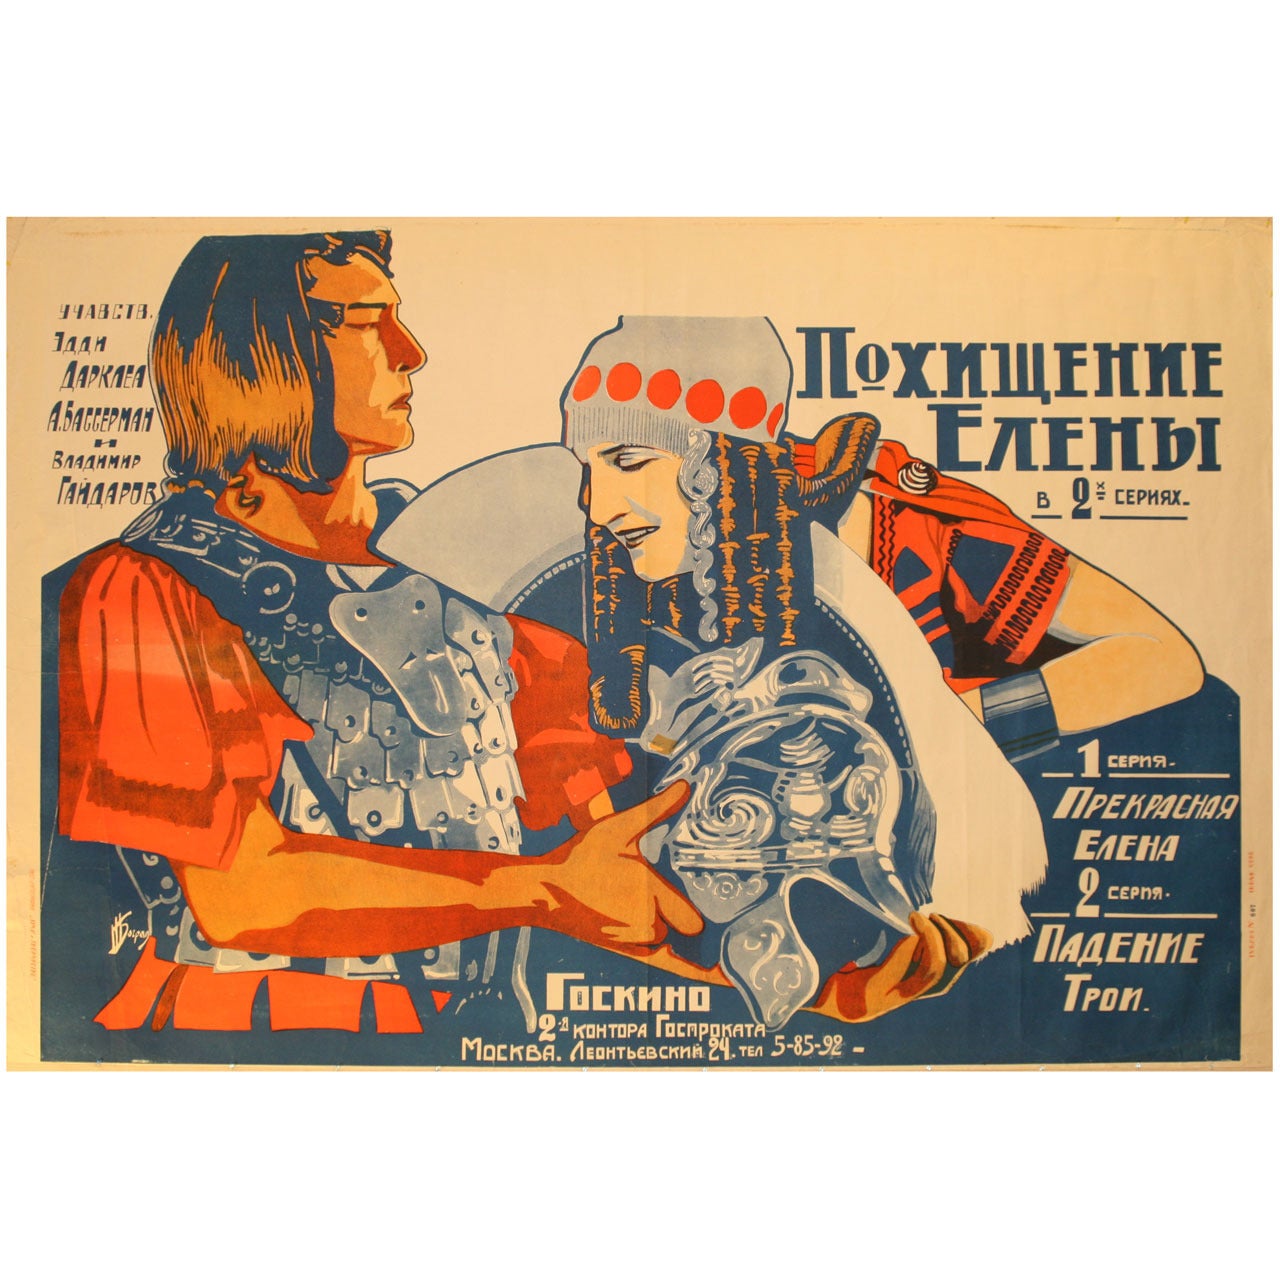 Rare Original Vintage Russian Avant Garde Movie Poster for Helen of Troy